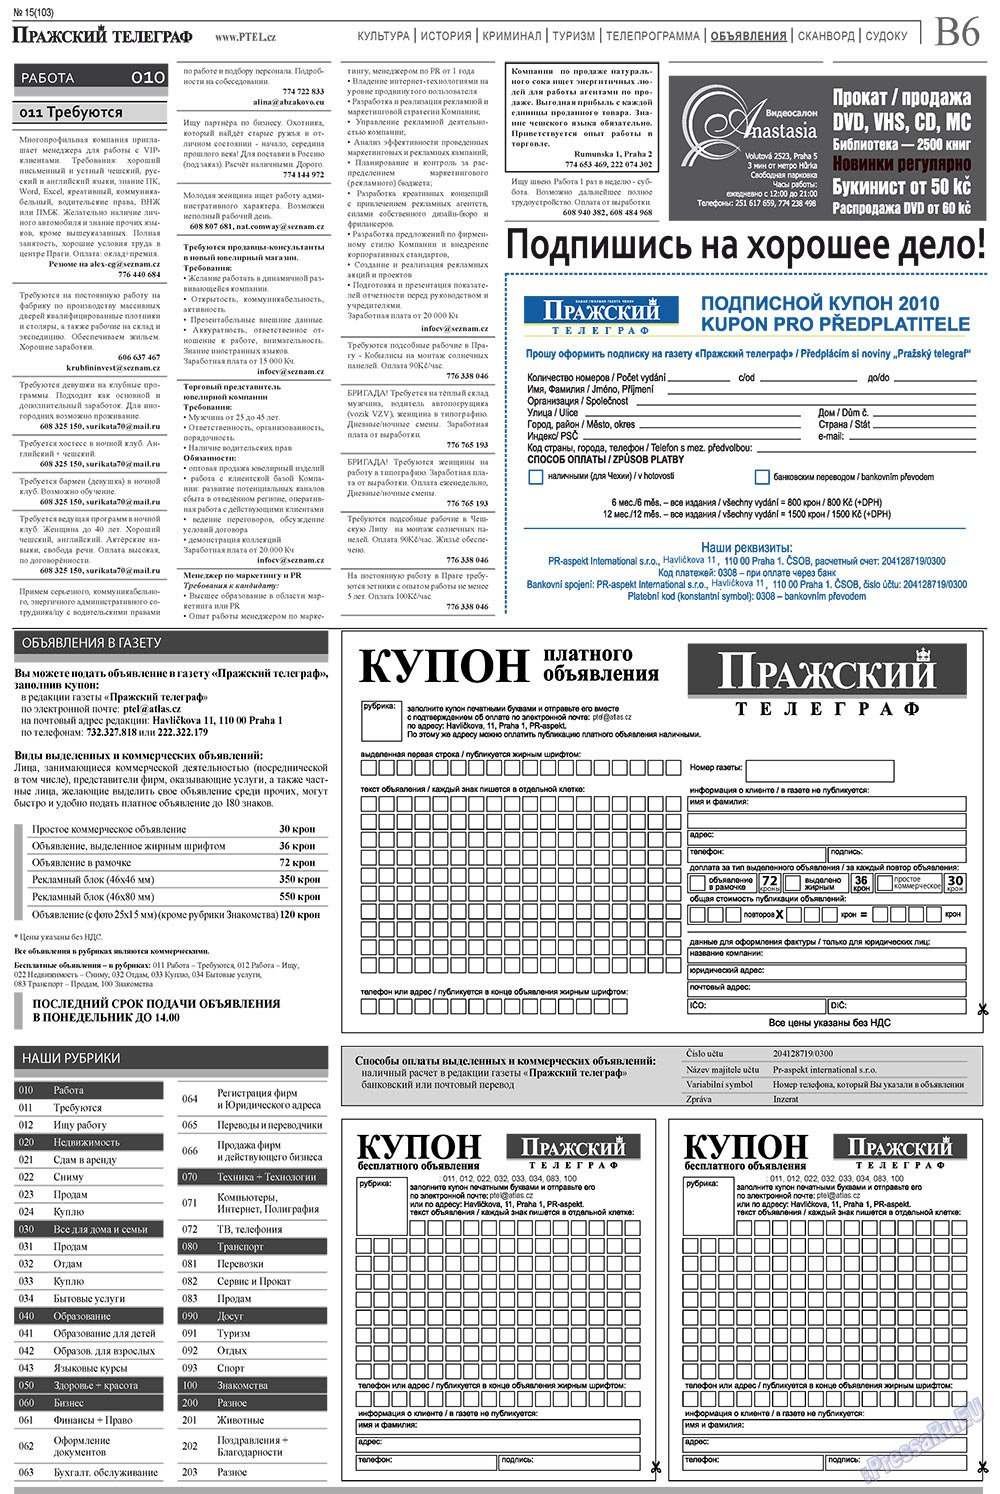 Пражский телеграф, газета. 2011 №15 стр.14